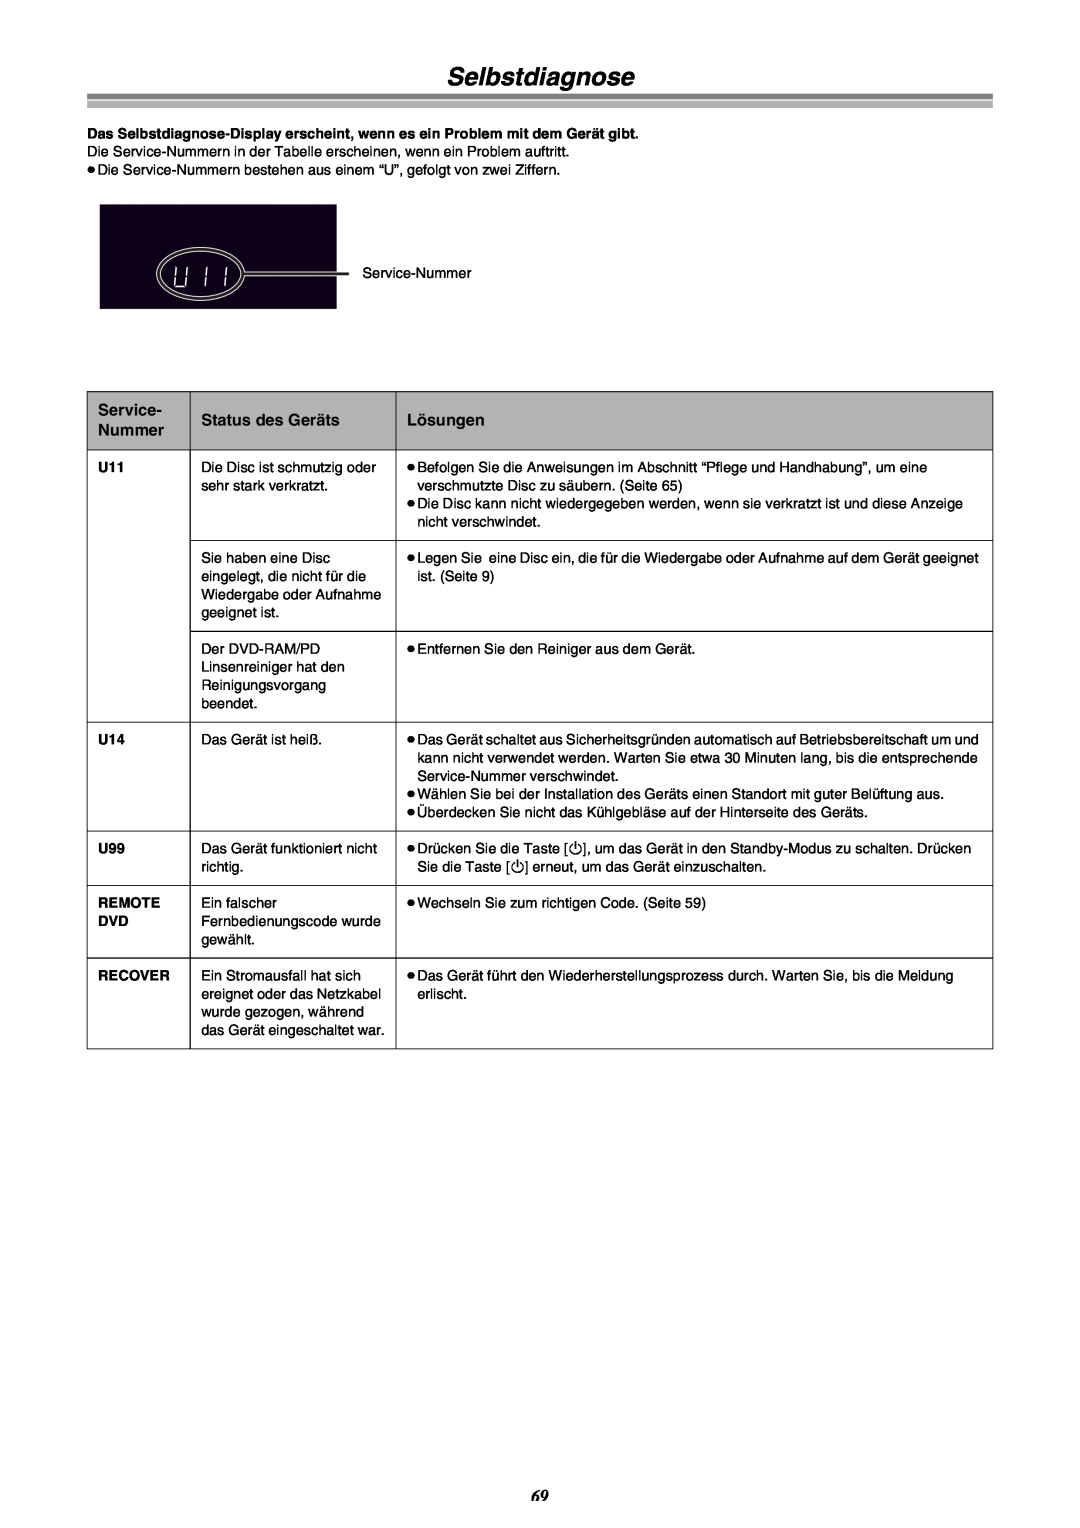 Panasonic DMR-E30 manual Selbstdiagnose, Service, Status des Geräts, Lösungen, Nummer 